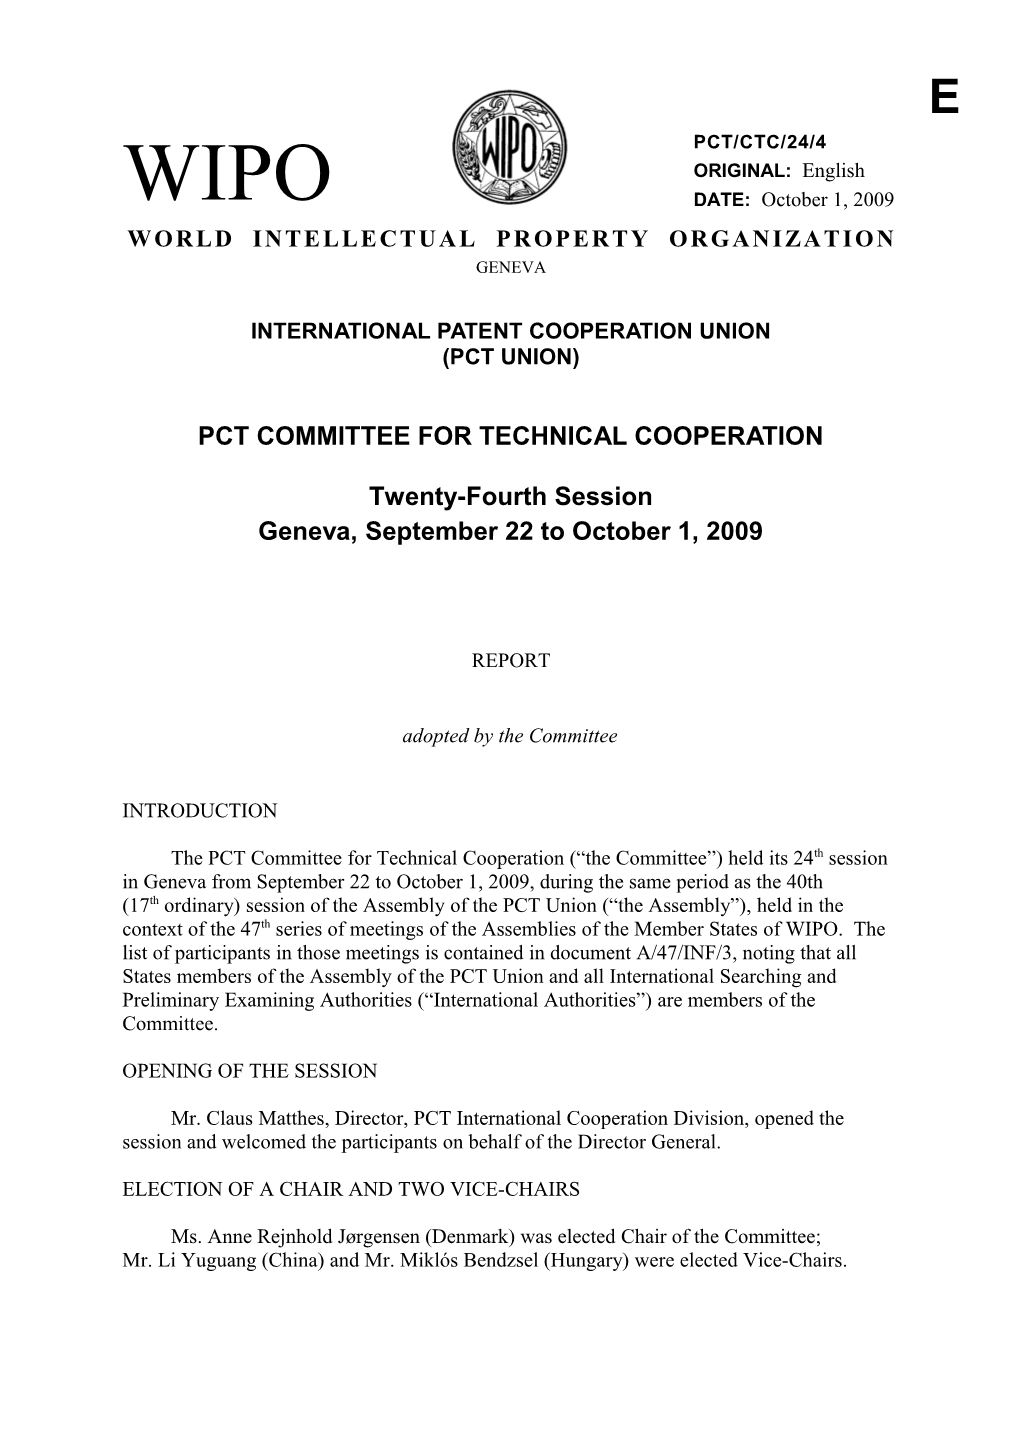 PCT/CTC/24/4 : Report